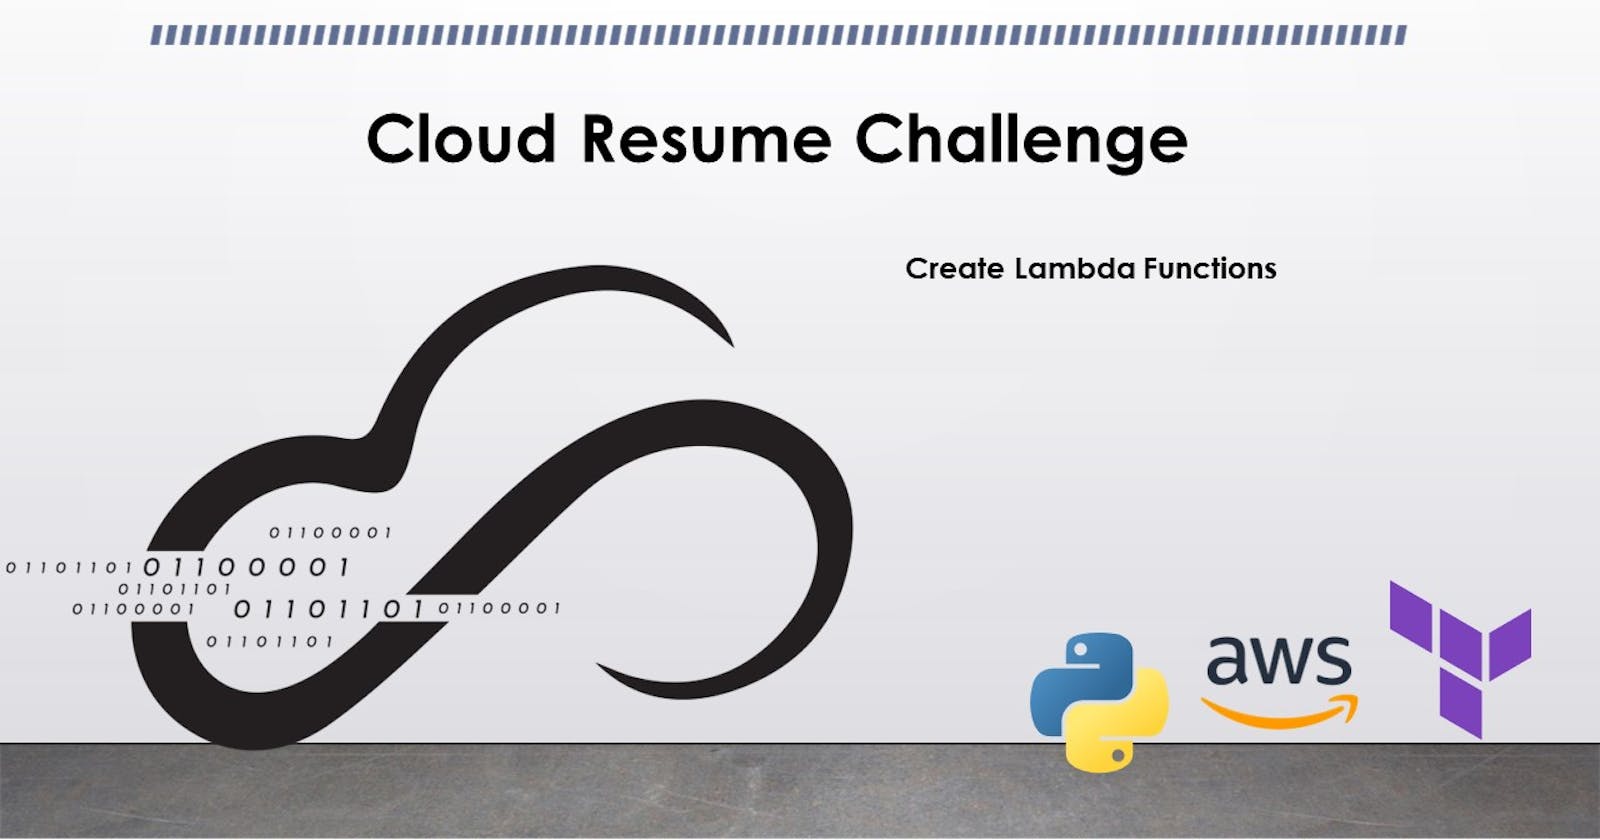 8. Cloud Resume Challenge: Creating Lambda Functions